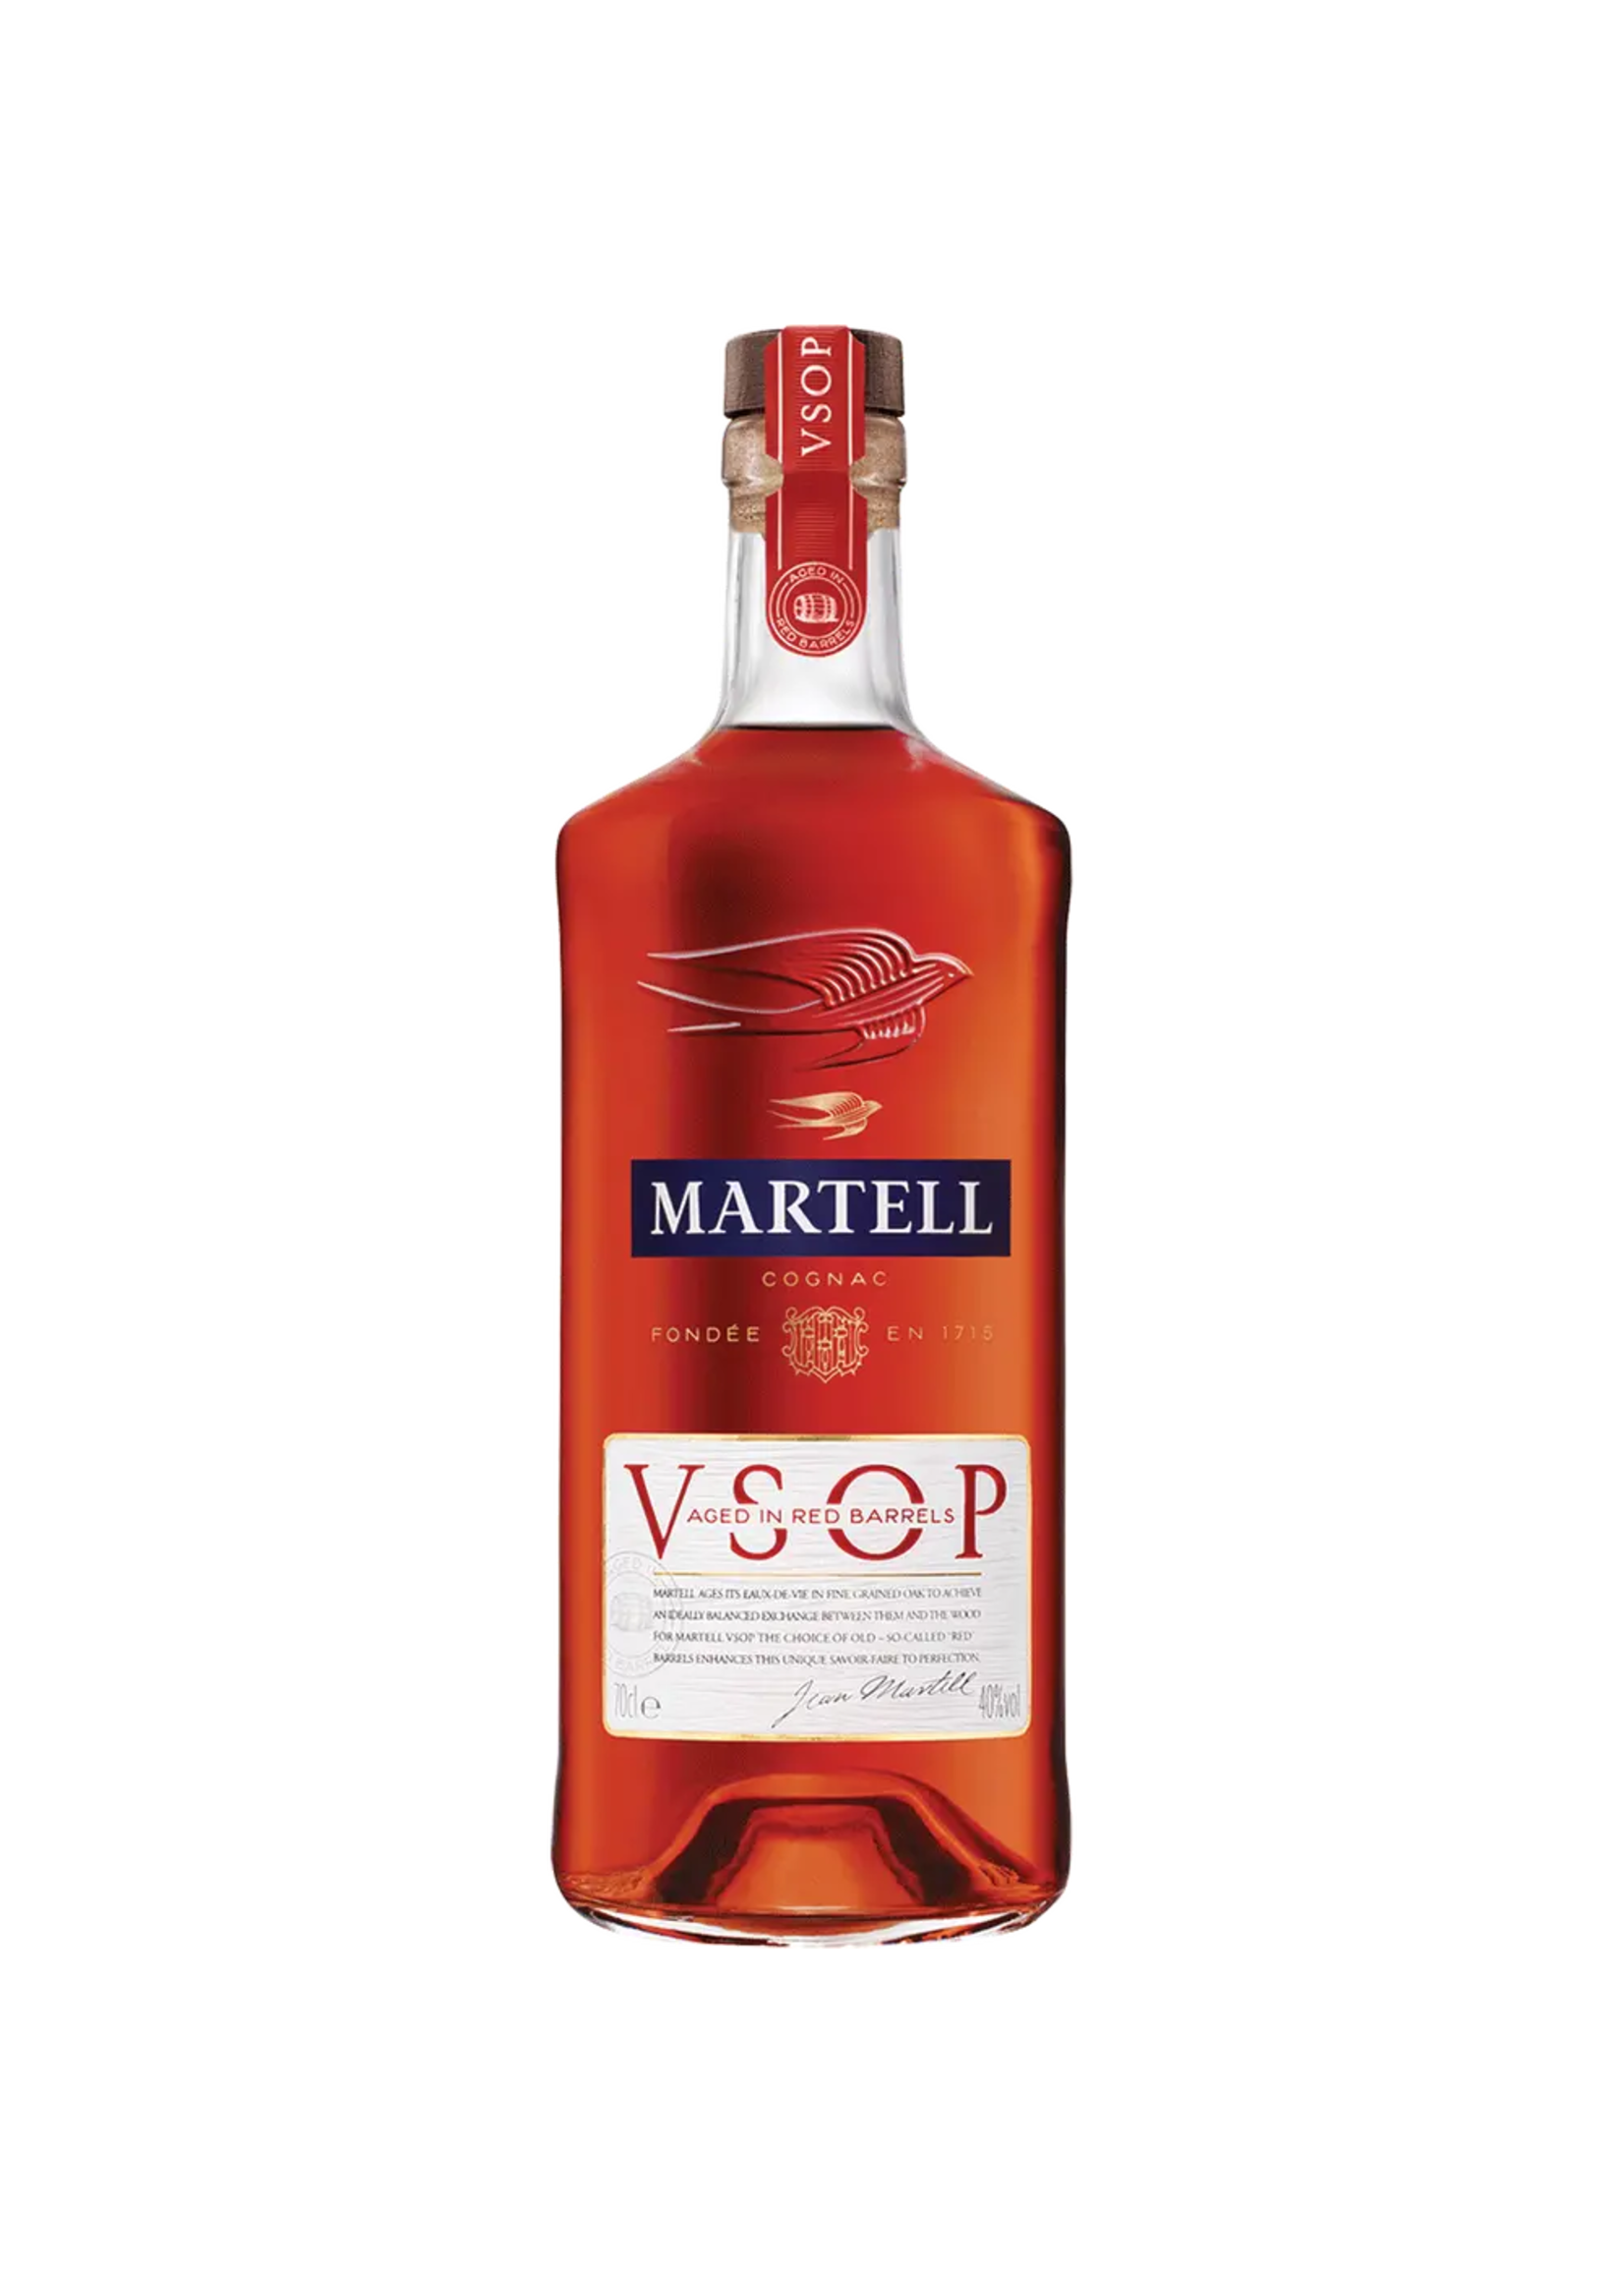 Martell VSOP 80Proof 750ml